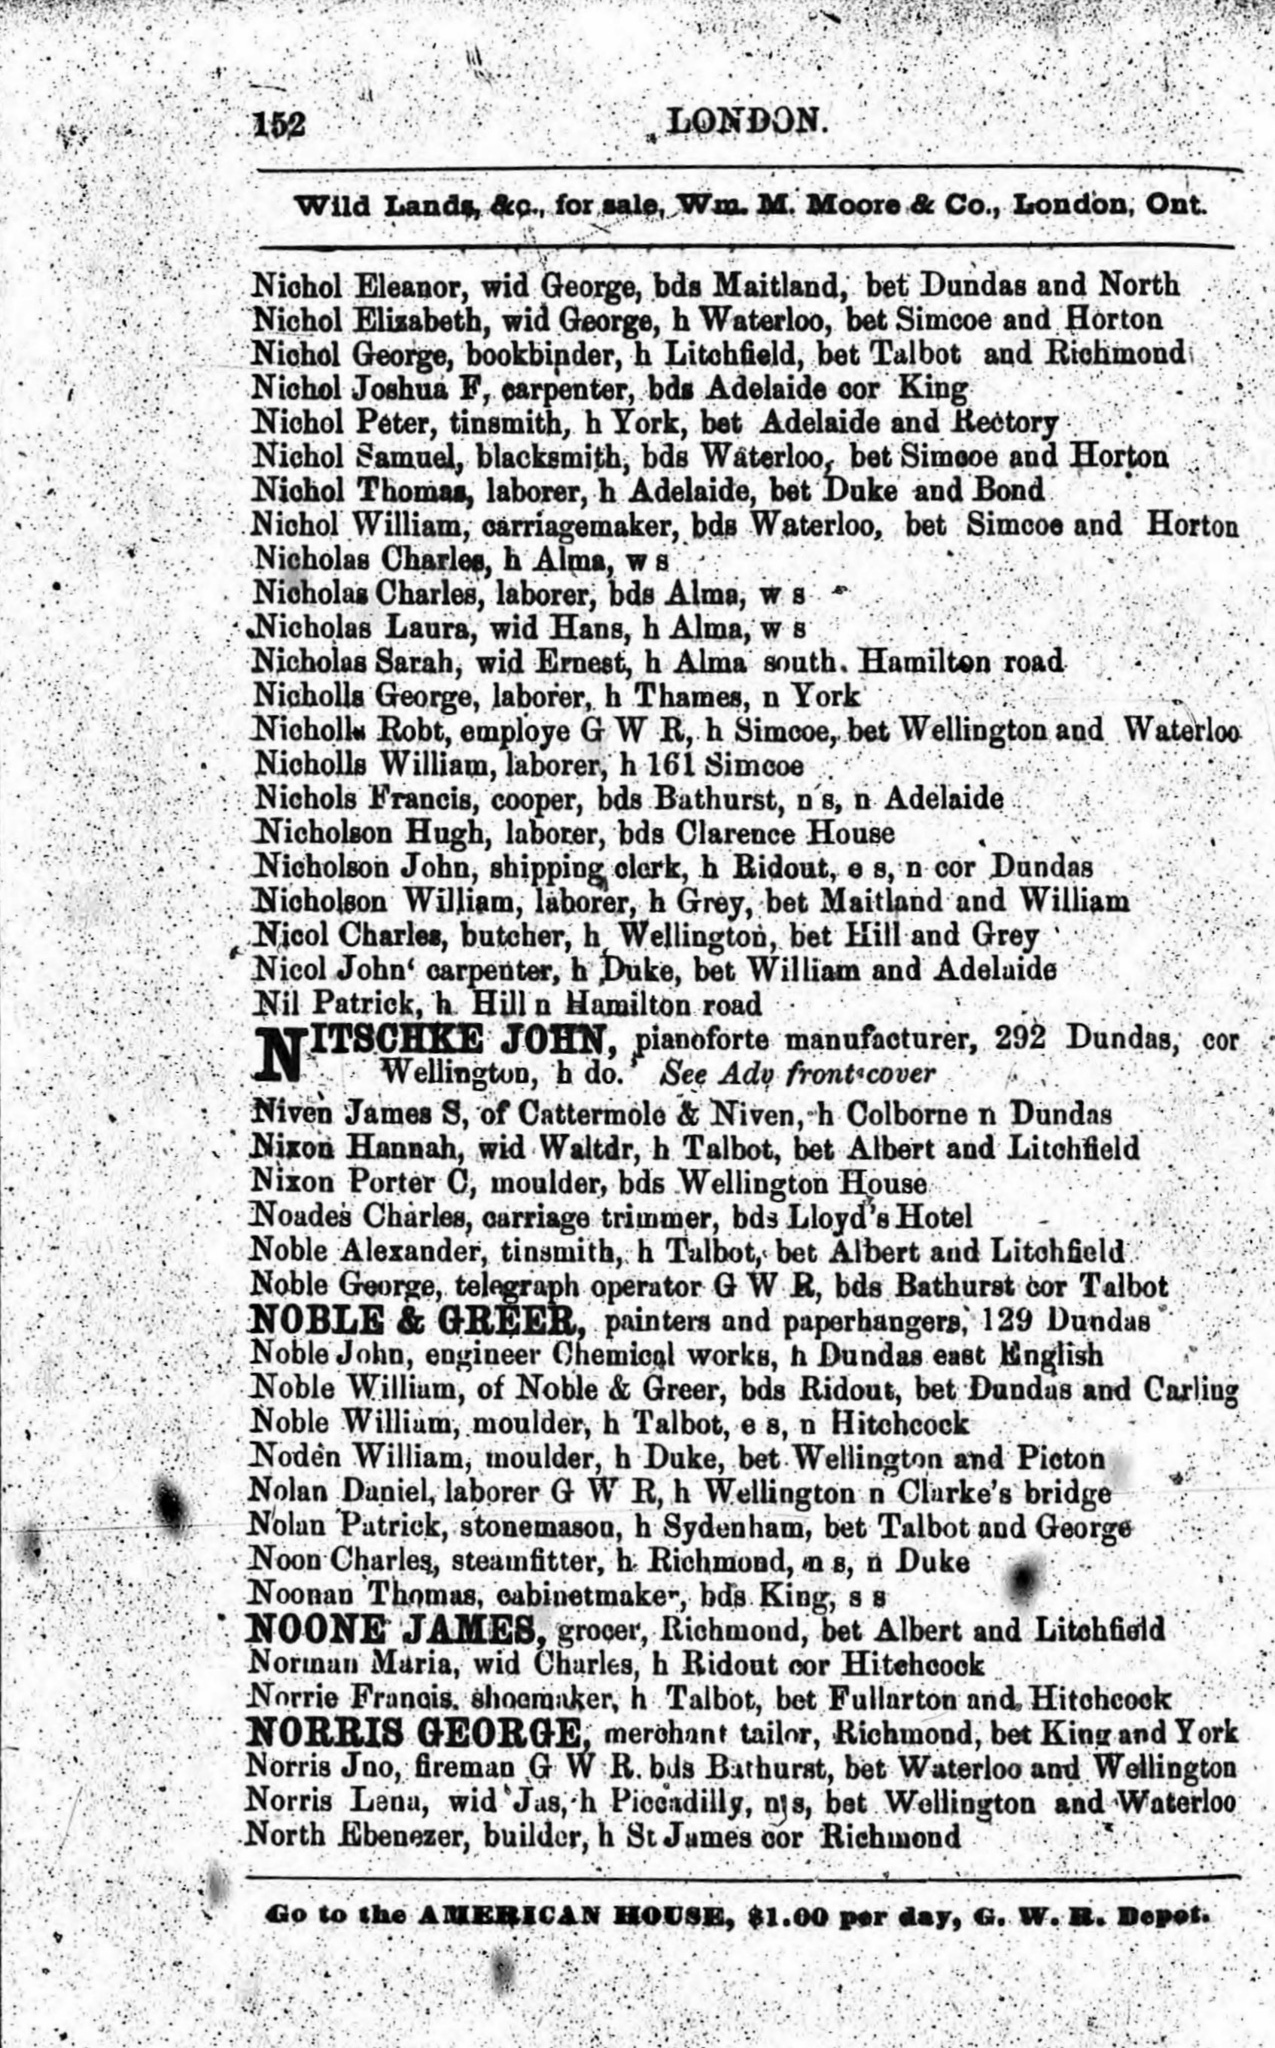 1875 London Ont City Directory for Nicholas